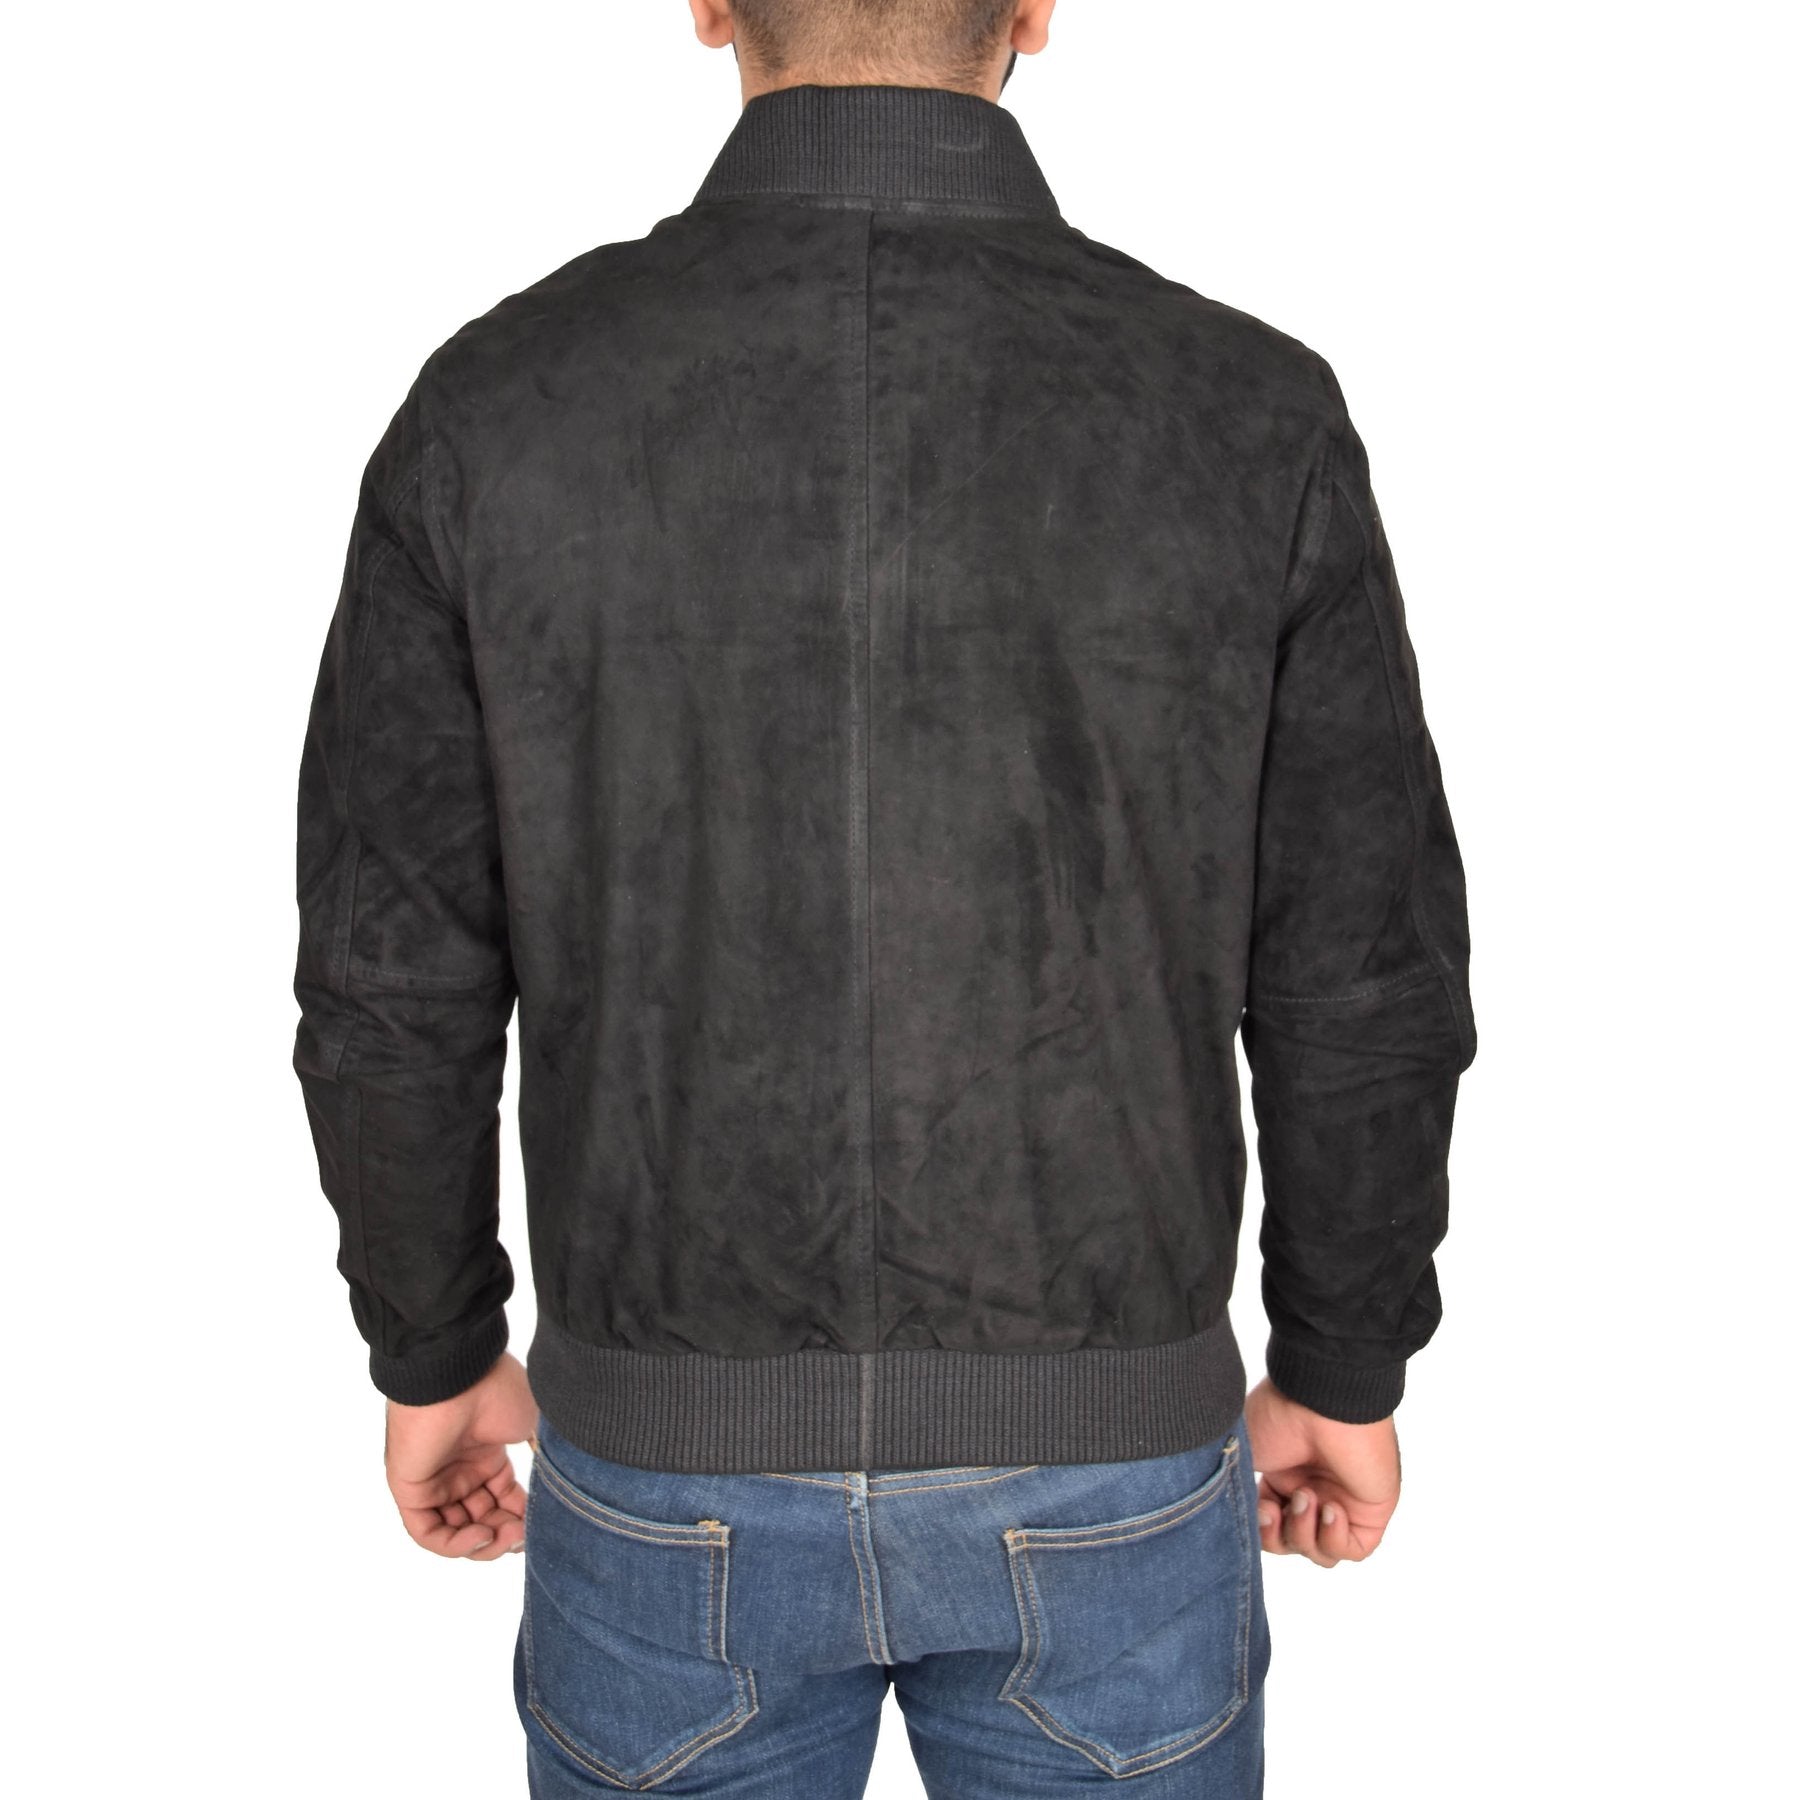 Spine Spark Black Soft Suede Leather Bomber Style Jacket